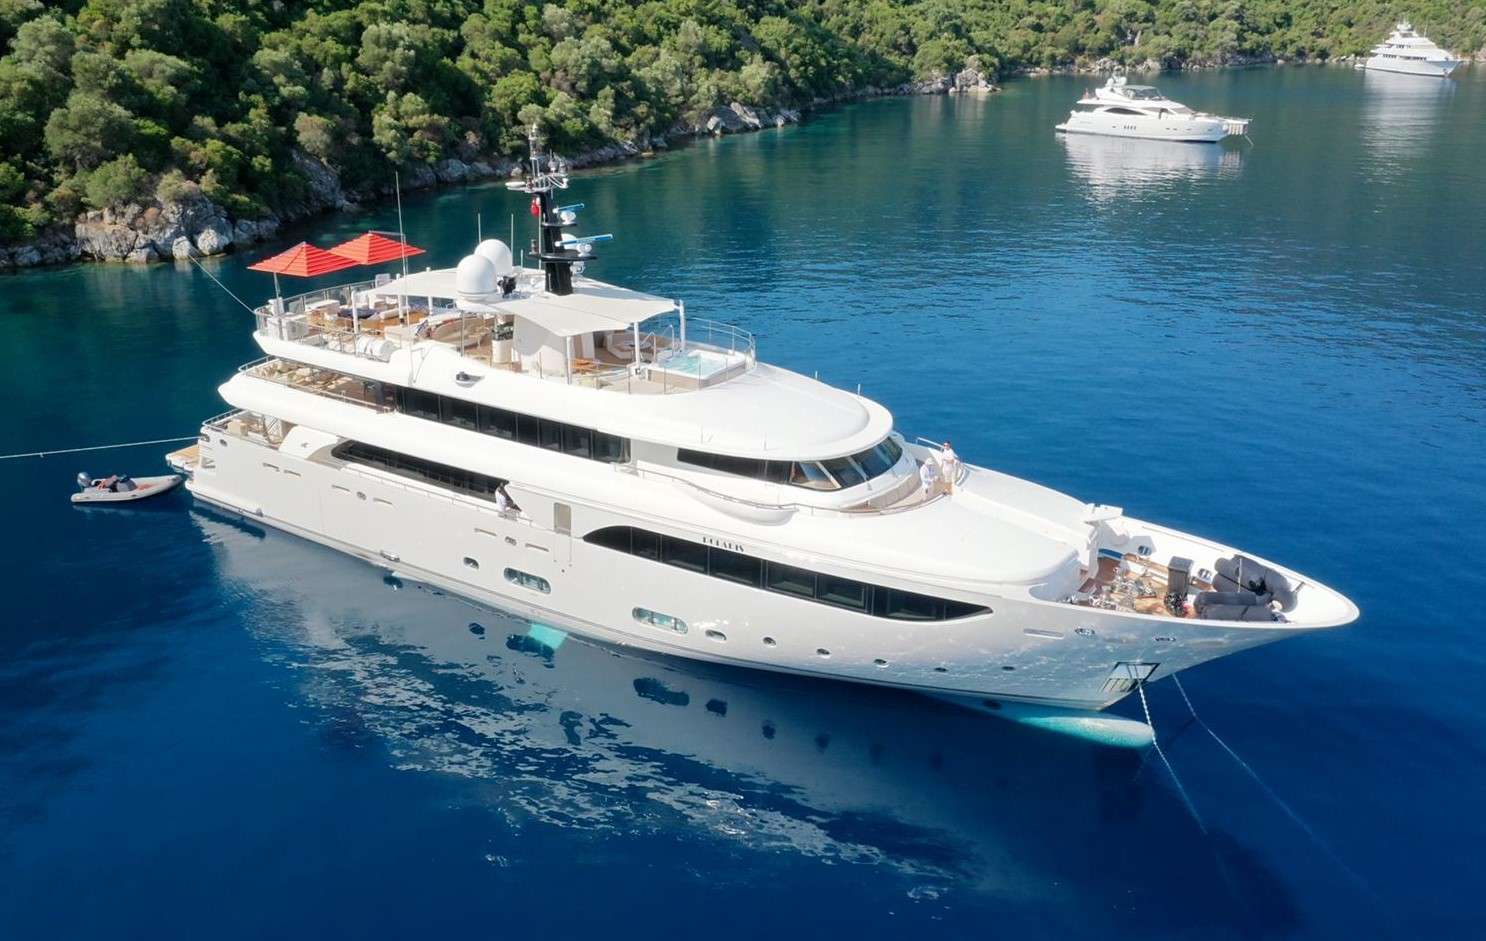 POLARIS - Luxury yacht charter Turkey & Boat hire in Croatia, Greece, Turkey 1